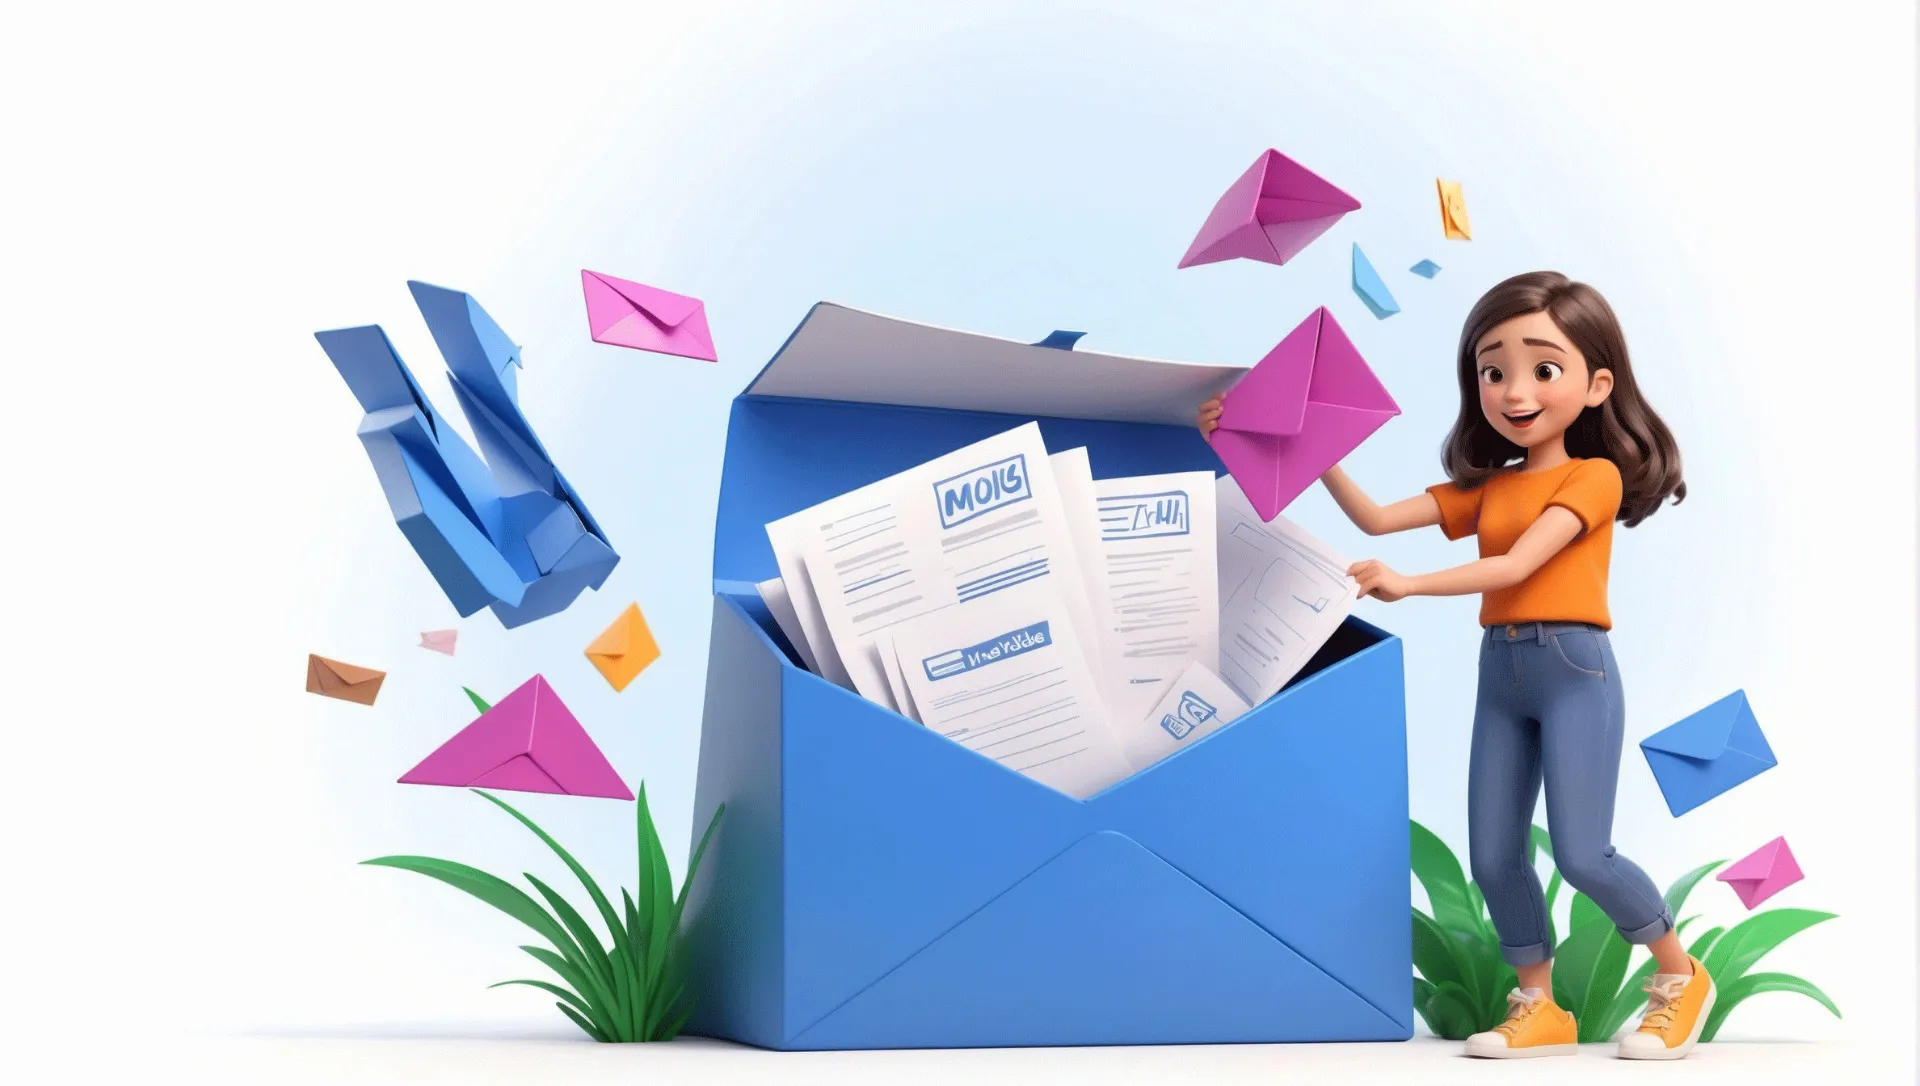 Artistic Representation of Email Marketing Concept Girl 3D Artwork Illustration image